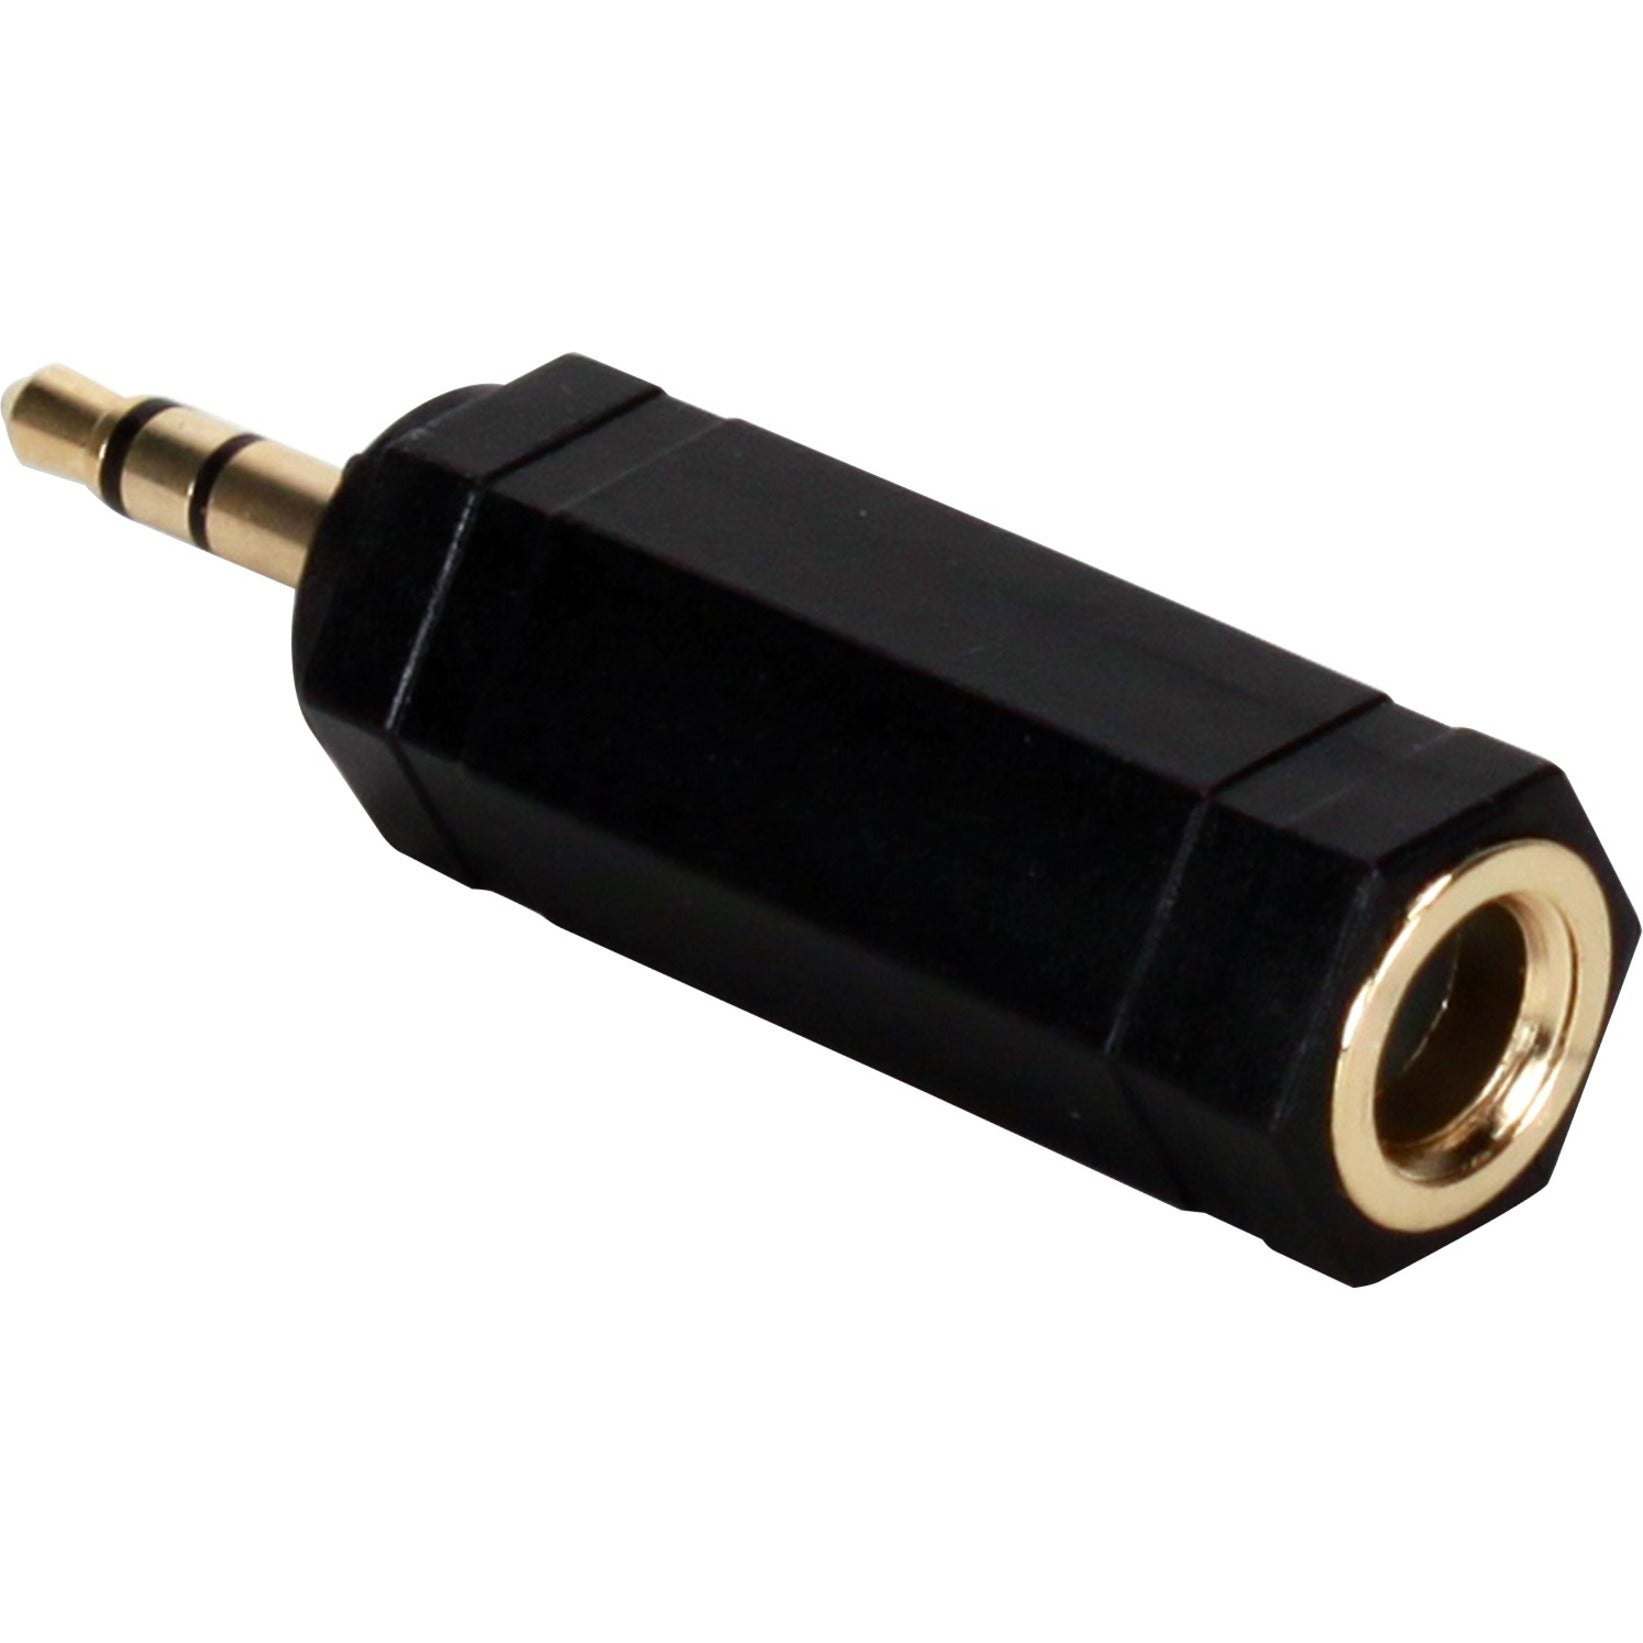 QVS CC399PS-MF 3.5mm Male to 1/4 Female Audio Stereo Adaptor, Mini-phone to 6.35mm Converter